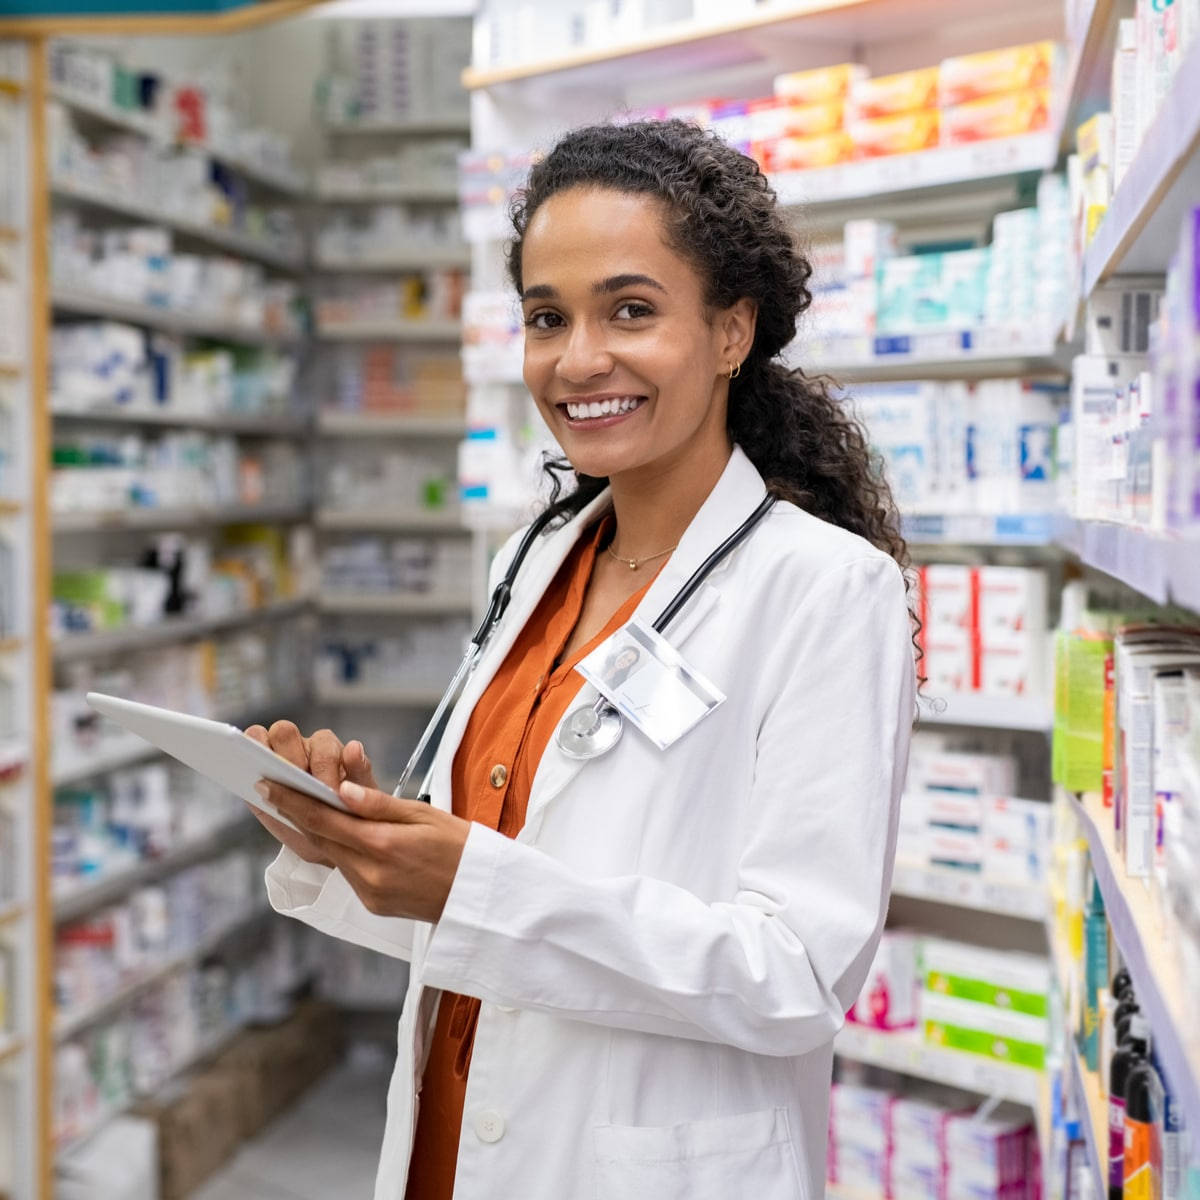 Lady Pharmacist Smiling Holding An Ipad